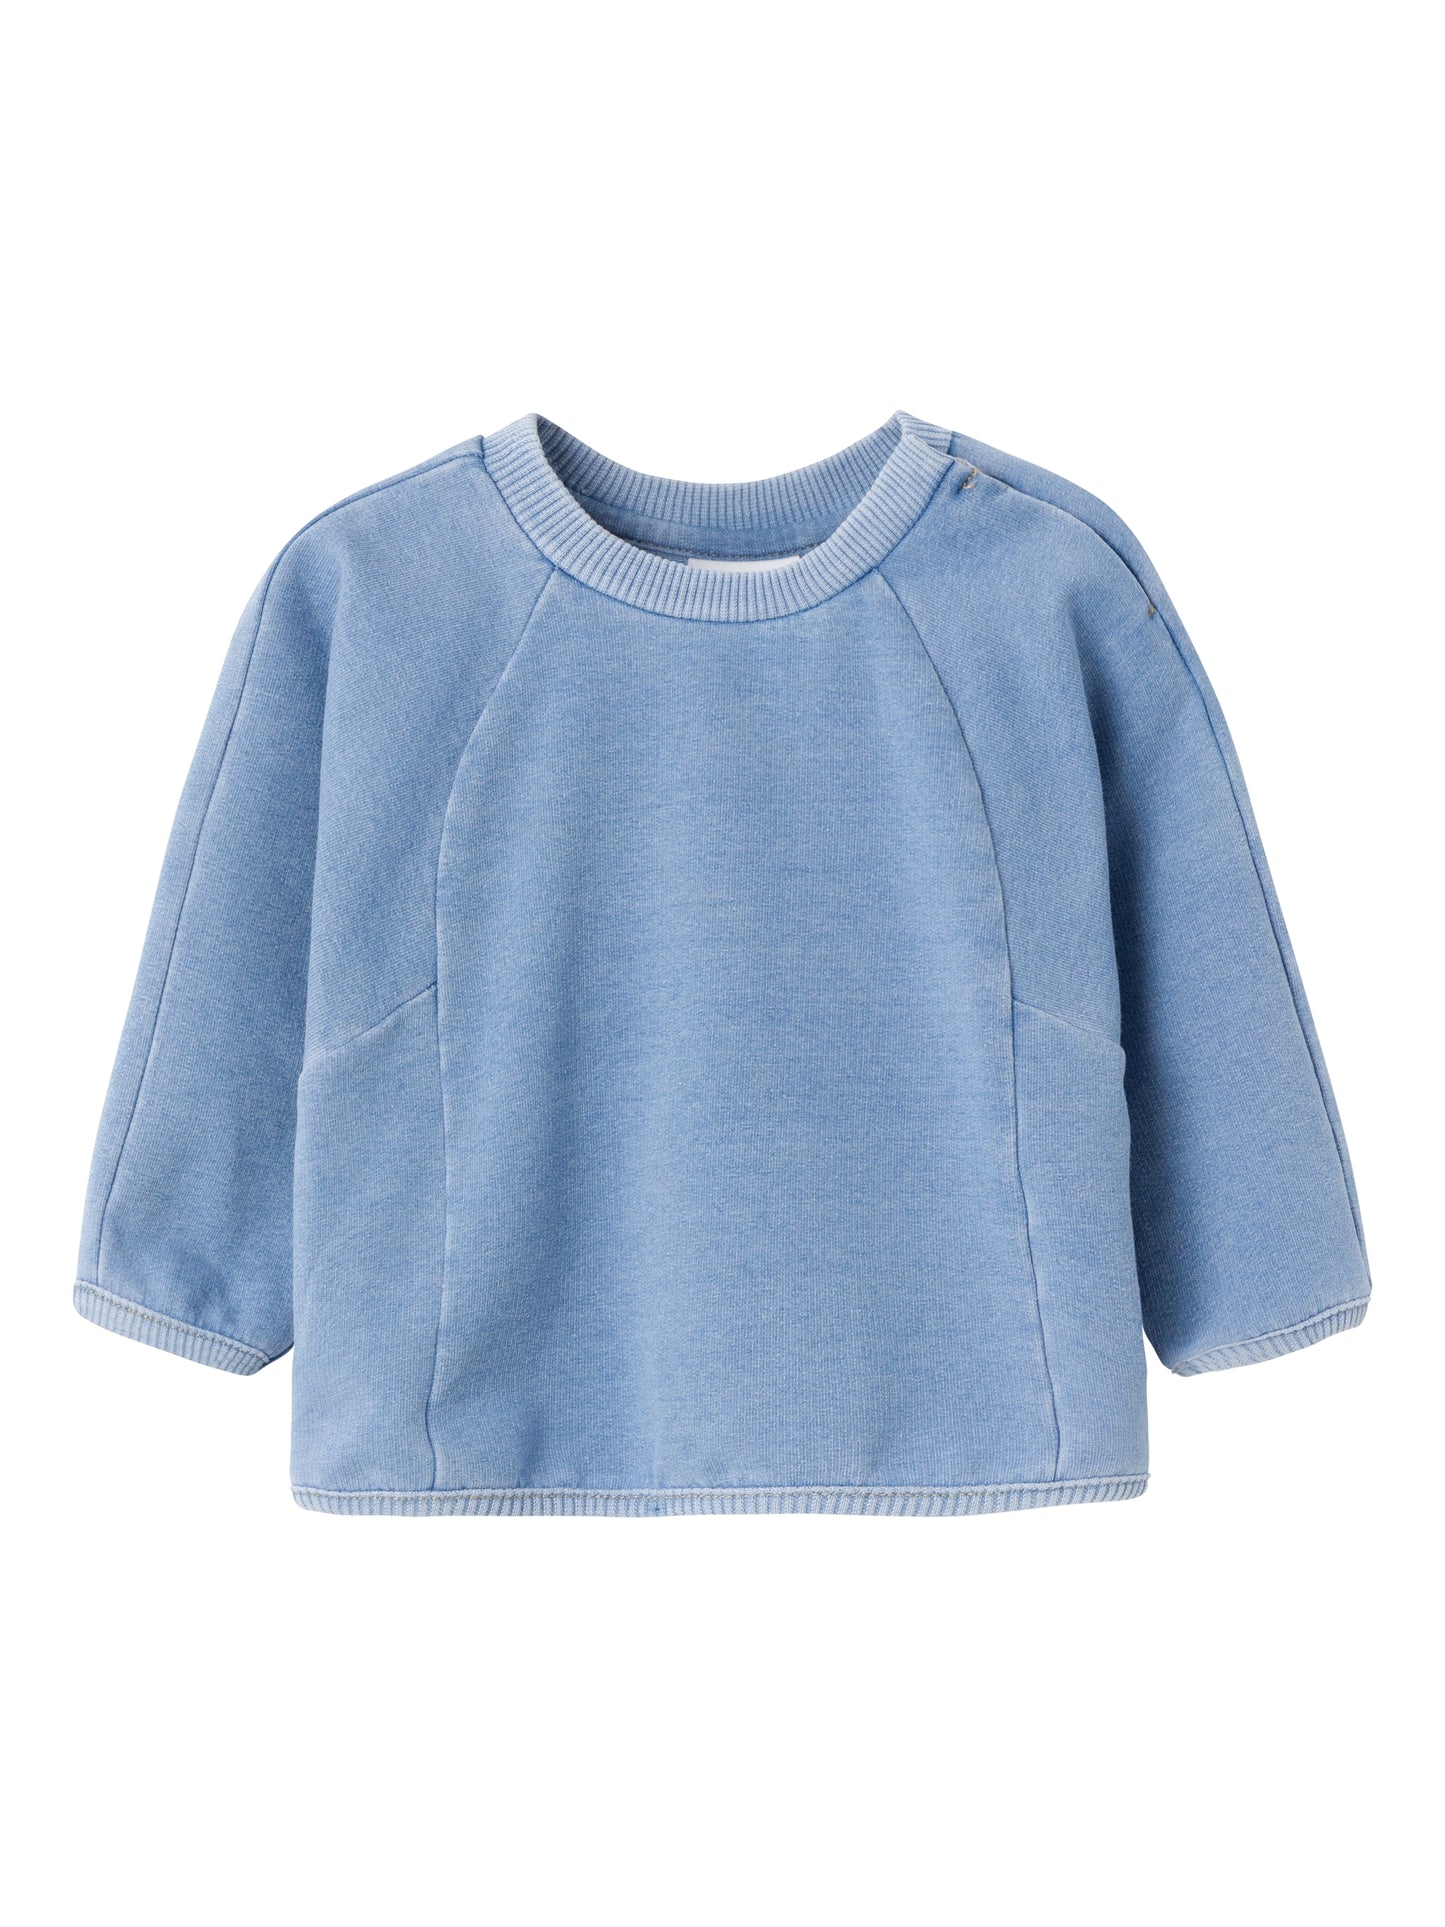 Name it - denim sweater - light blue denim